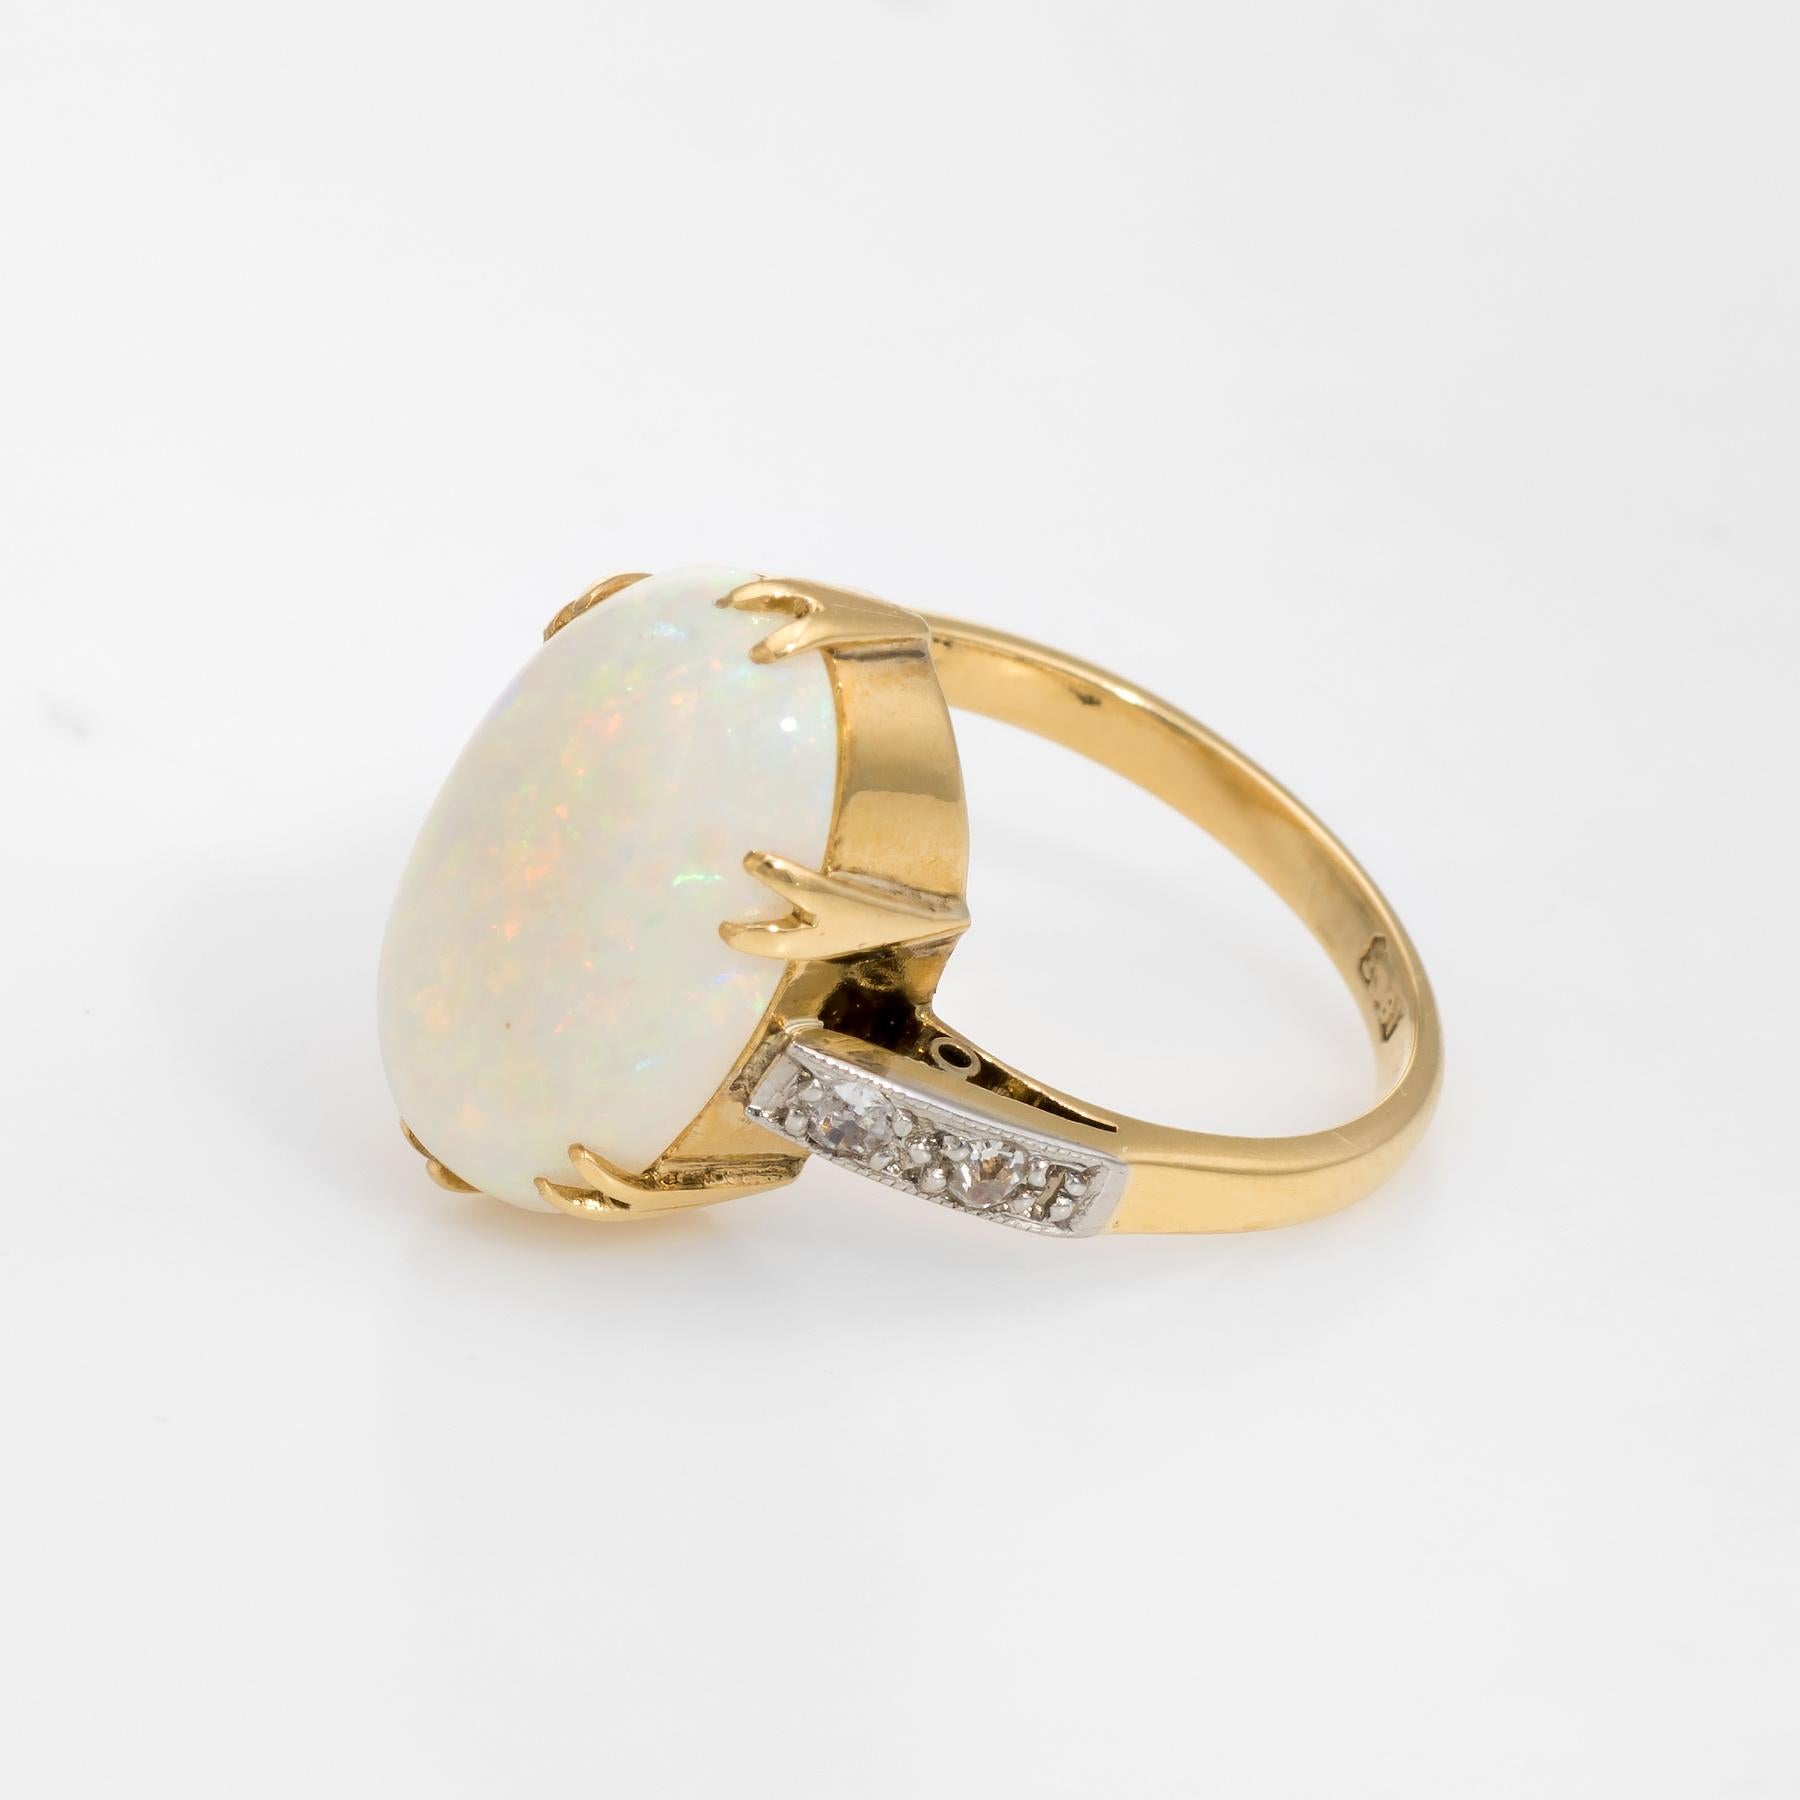 Oval Cut Antique Deco Opal Diamond Ring Vintage 18 Karat Yellow Gold Estate Fine Jewelry